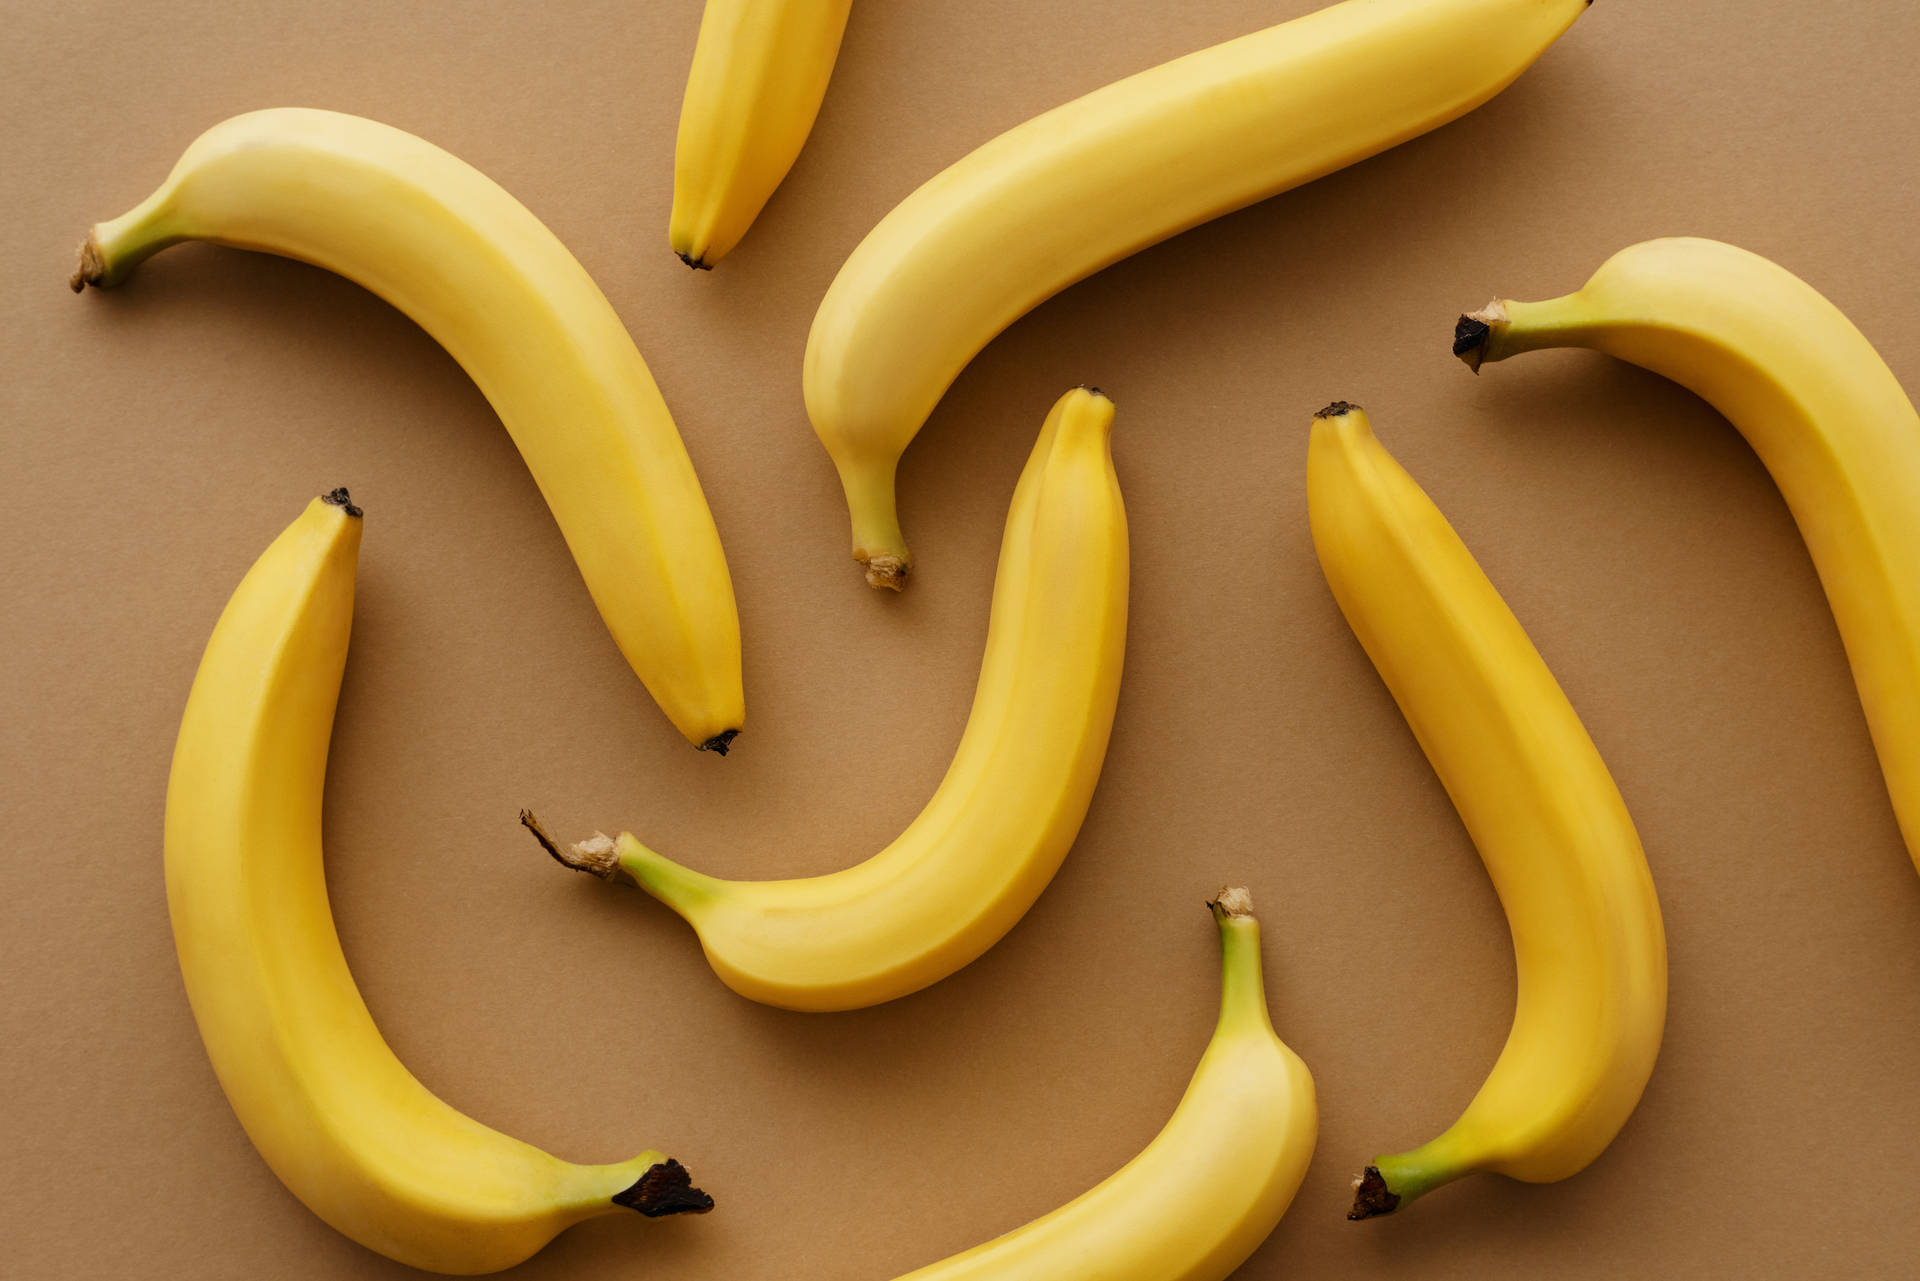 Free Banana Wallpaper Downloads, Banana Wallpaper for FREE